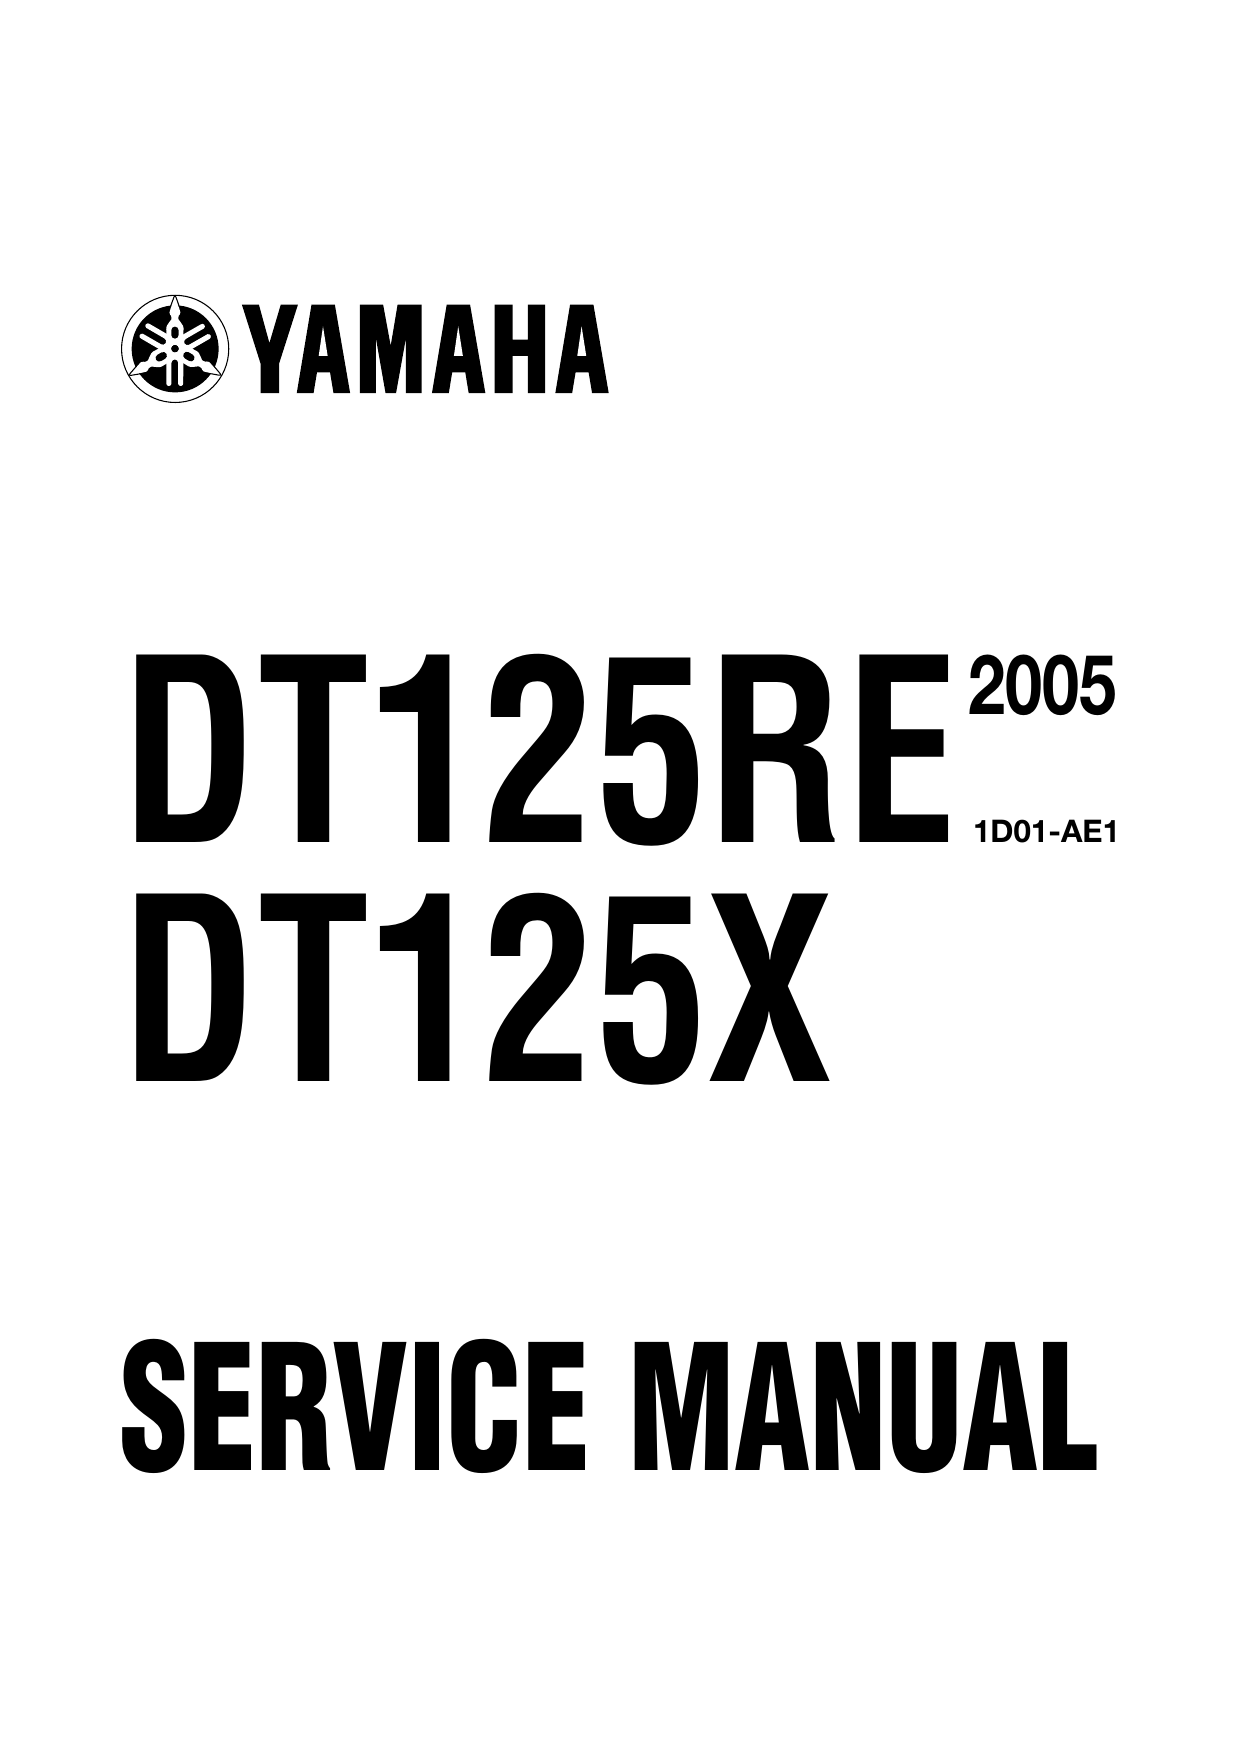 2005 Yamaha DT125X, DT125RE shop manual Preview image 6